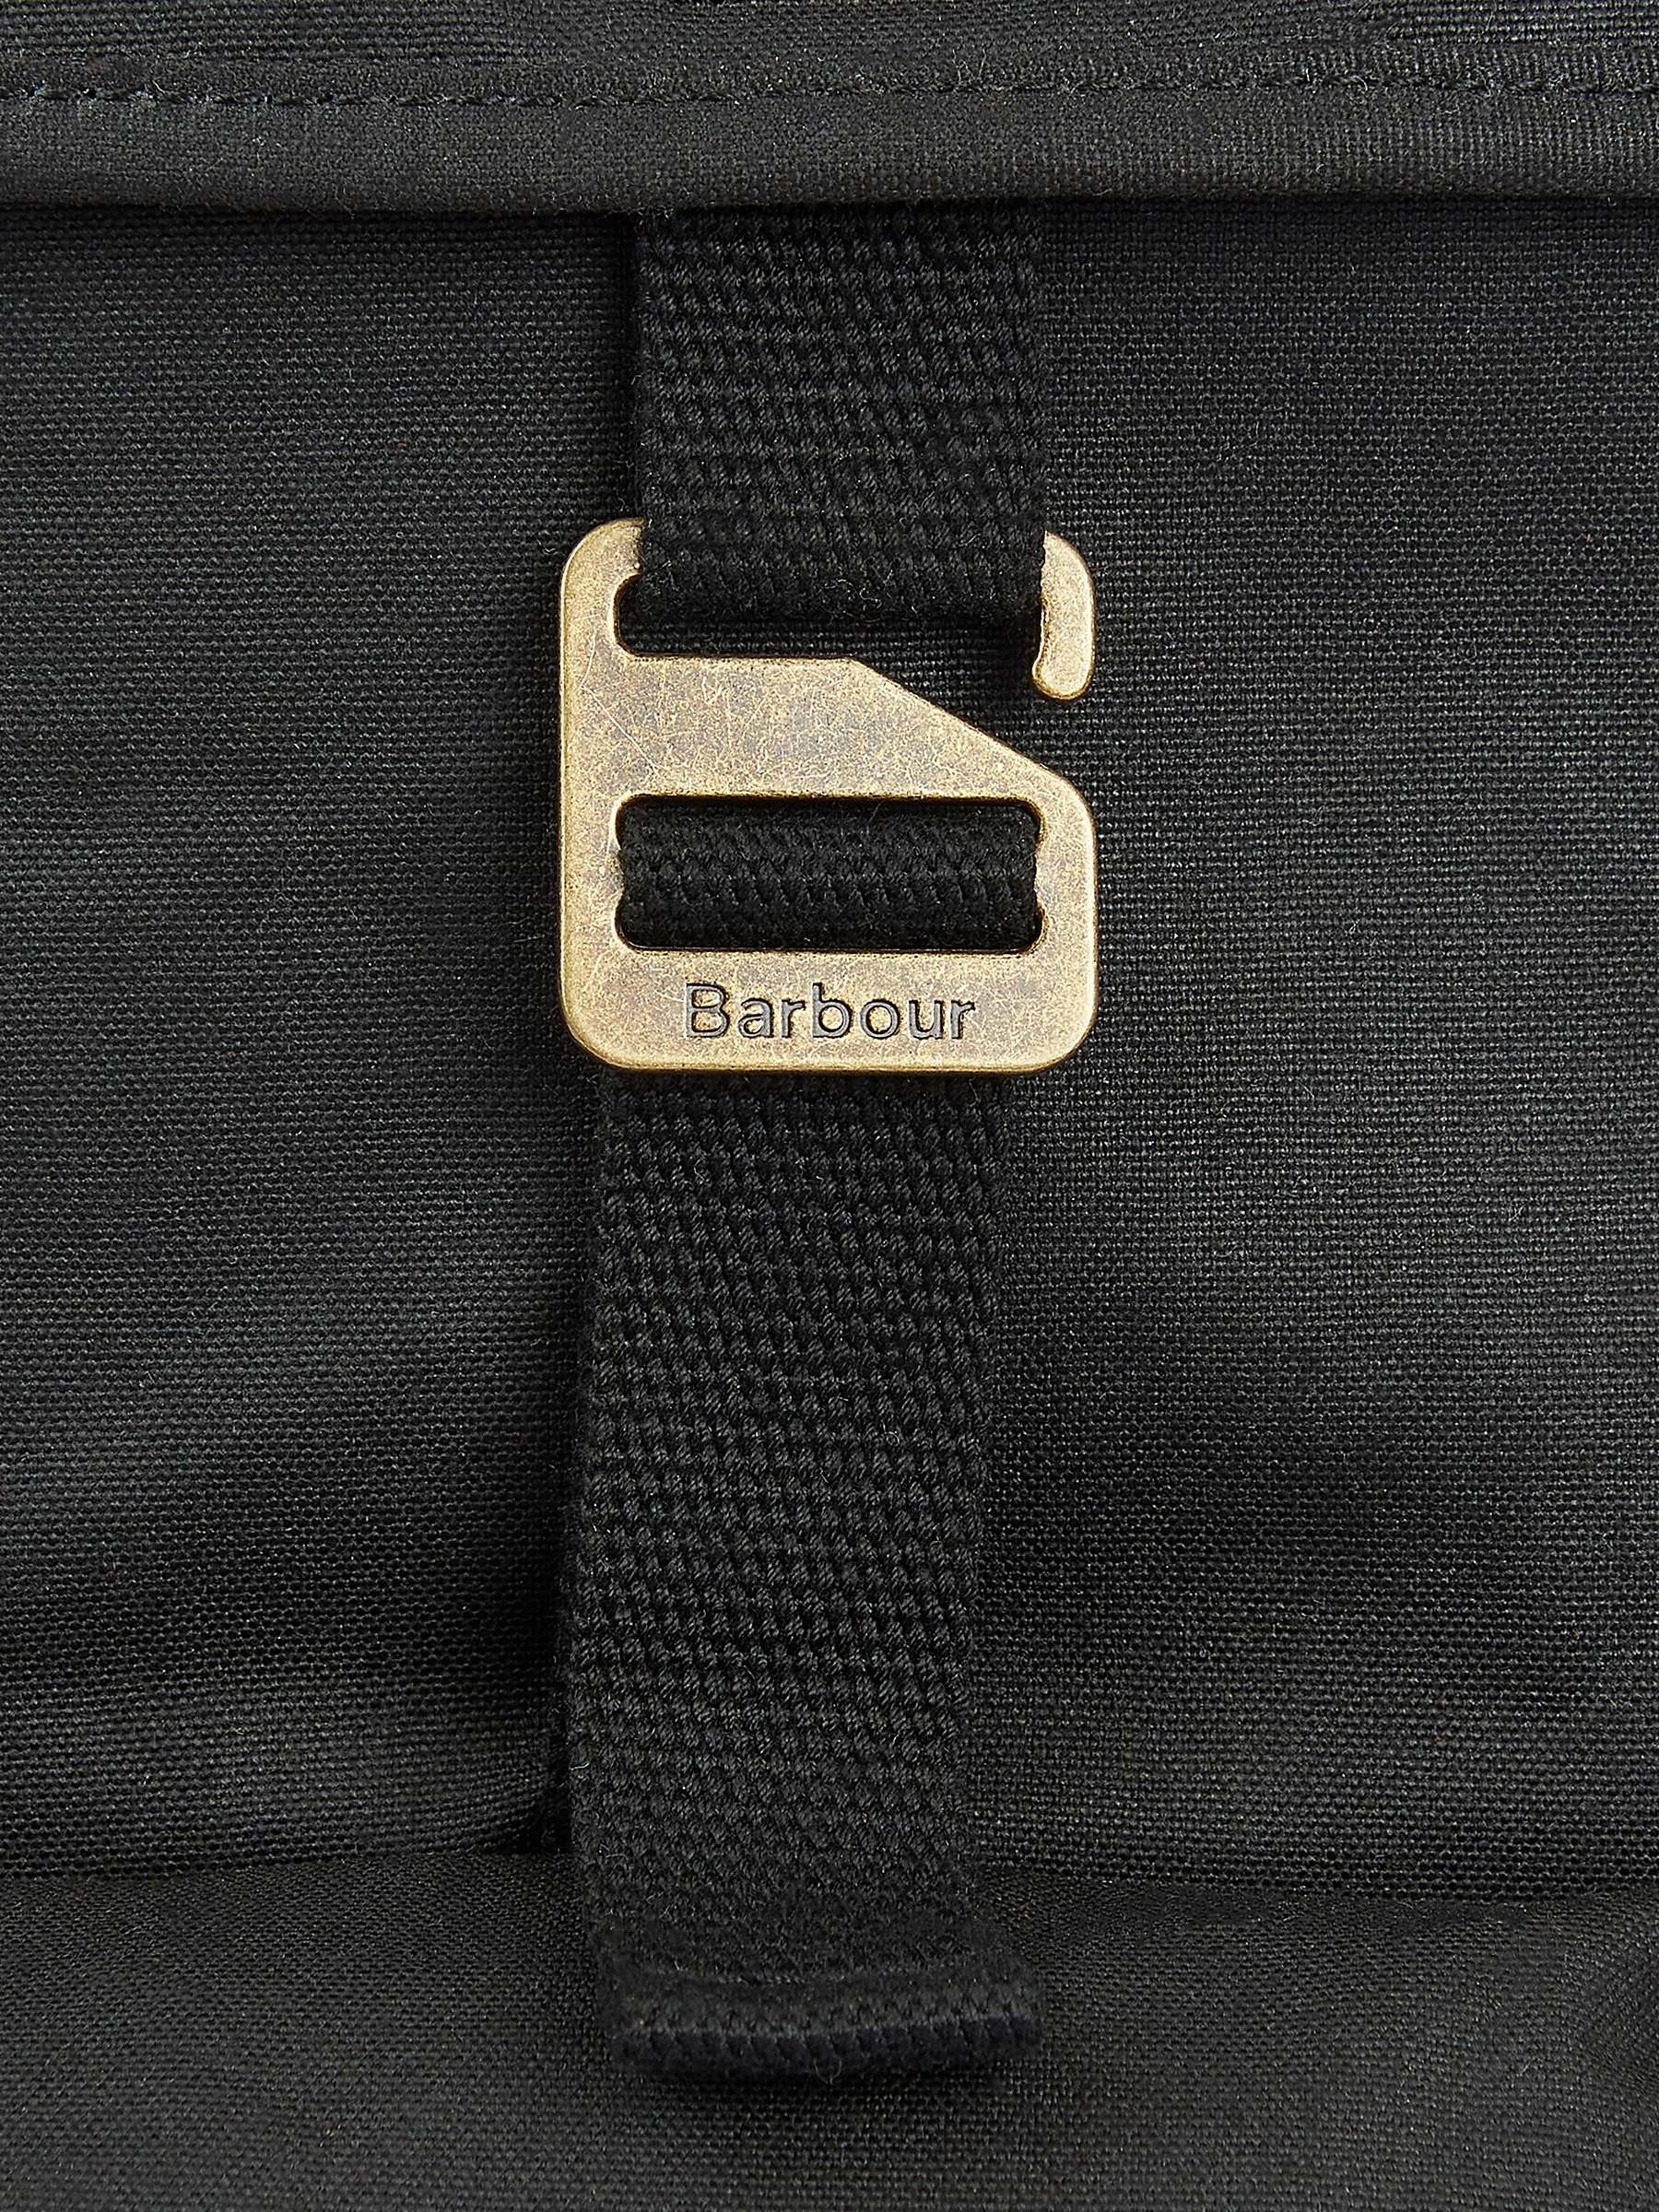 Buy Barbour Essential Wax Backpack, Black Online at johnlewis.com